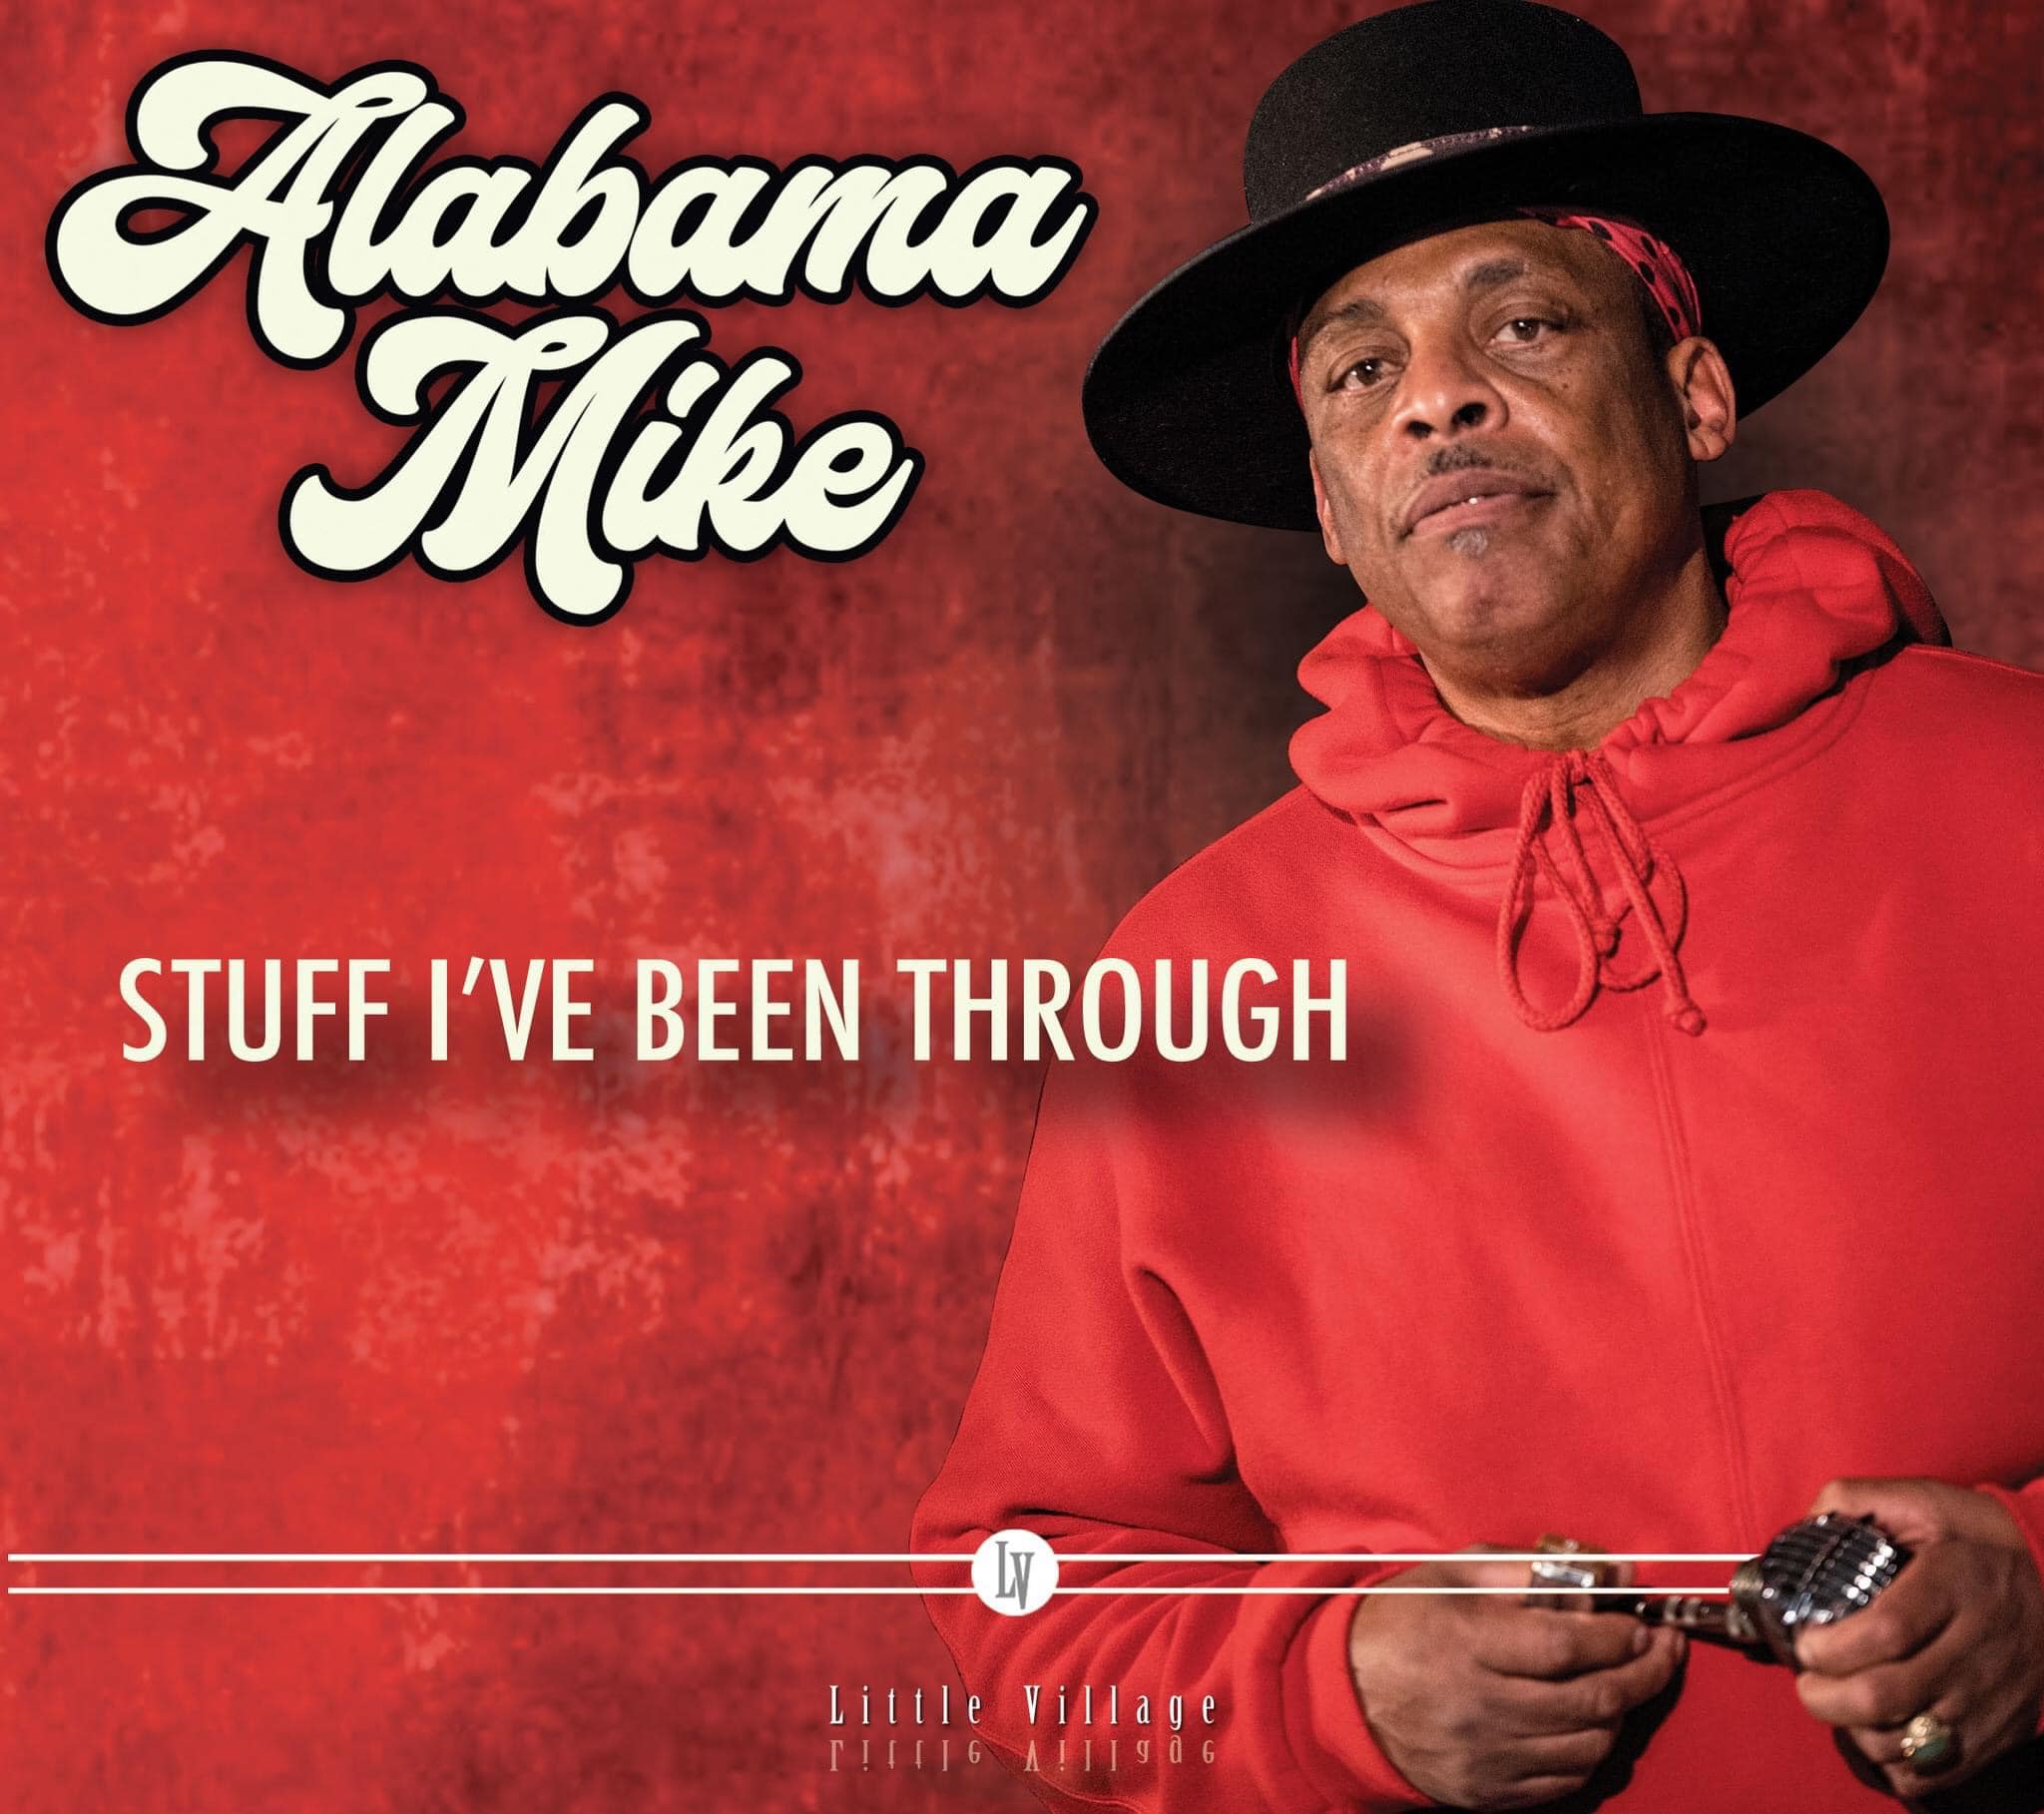 Alabama Mike - Stuff I’ve Been Through